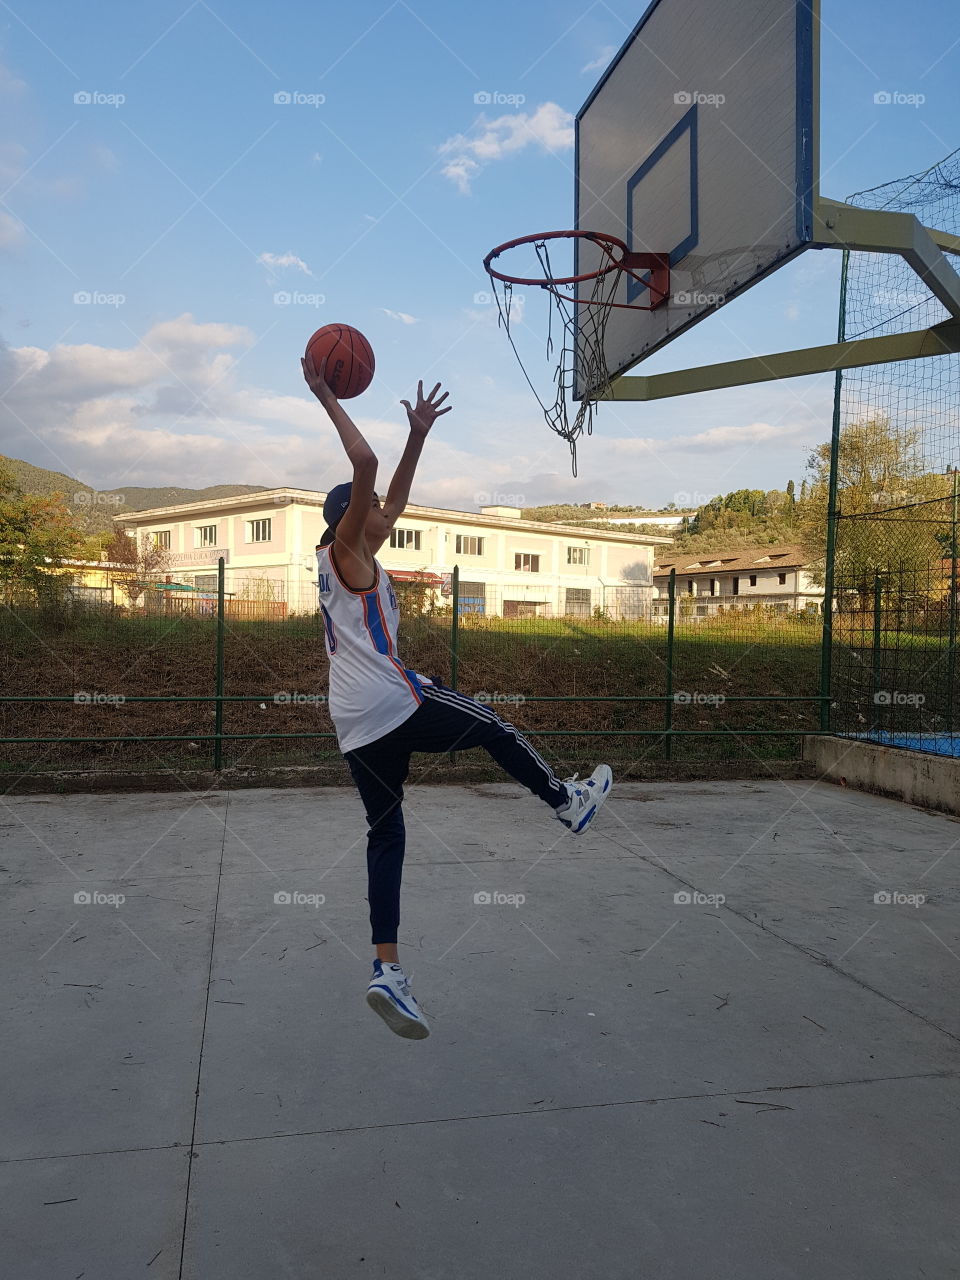 Basketball, Ball, Basketball Hoop, Recreation, Action Energy